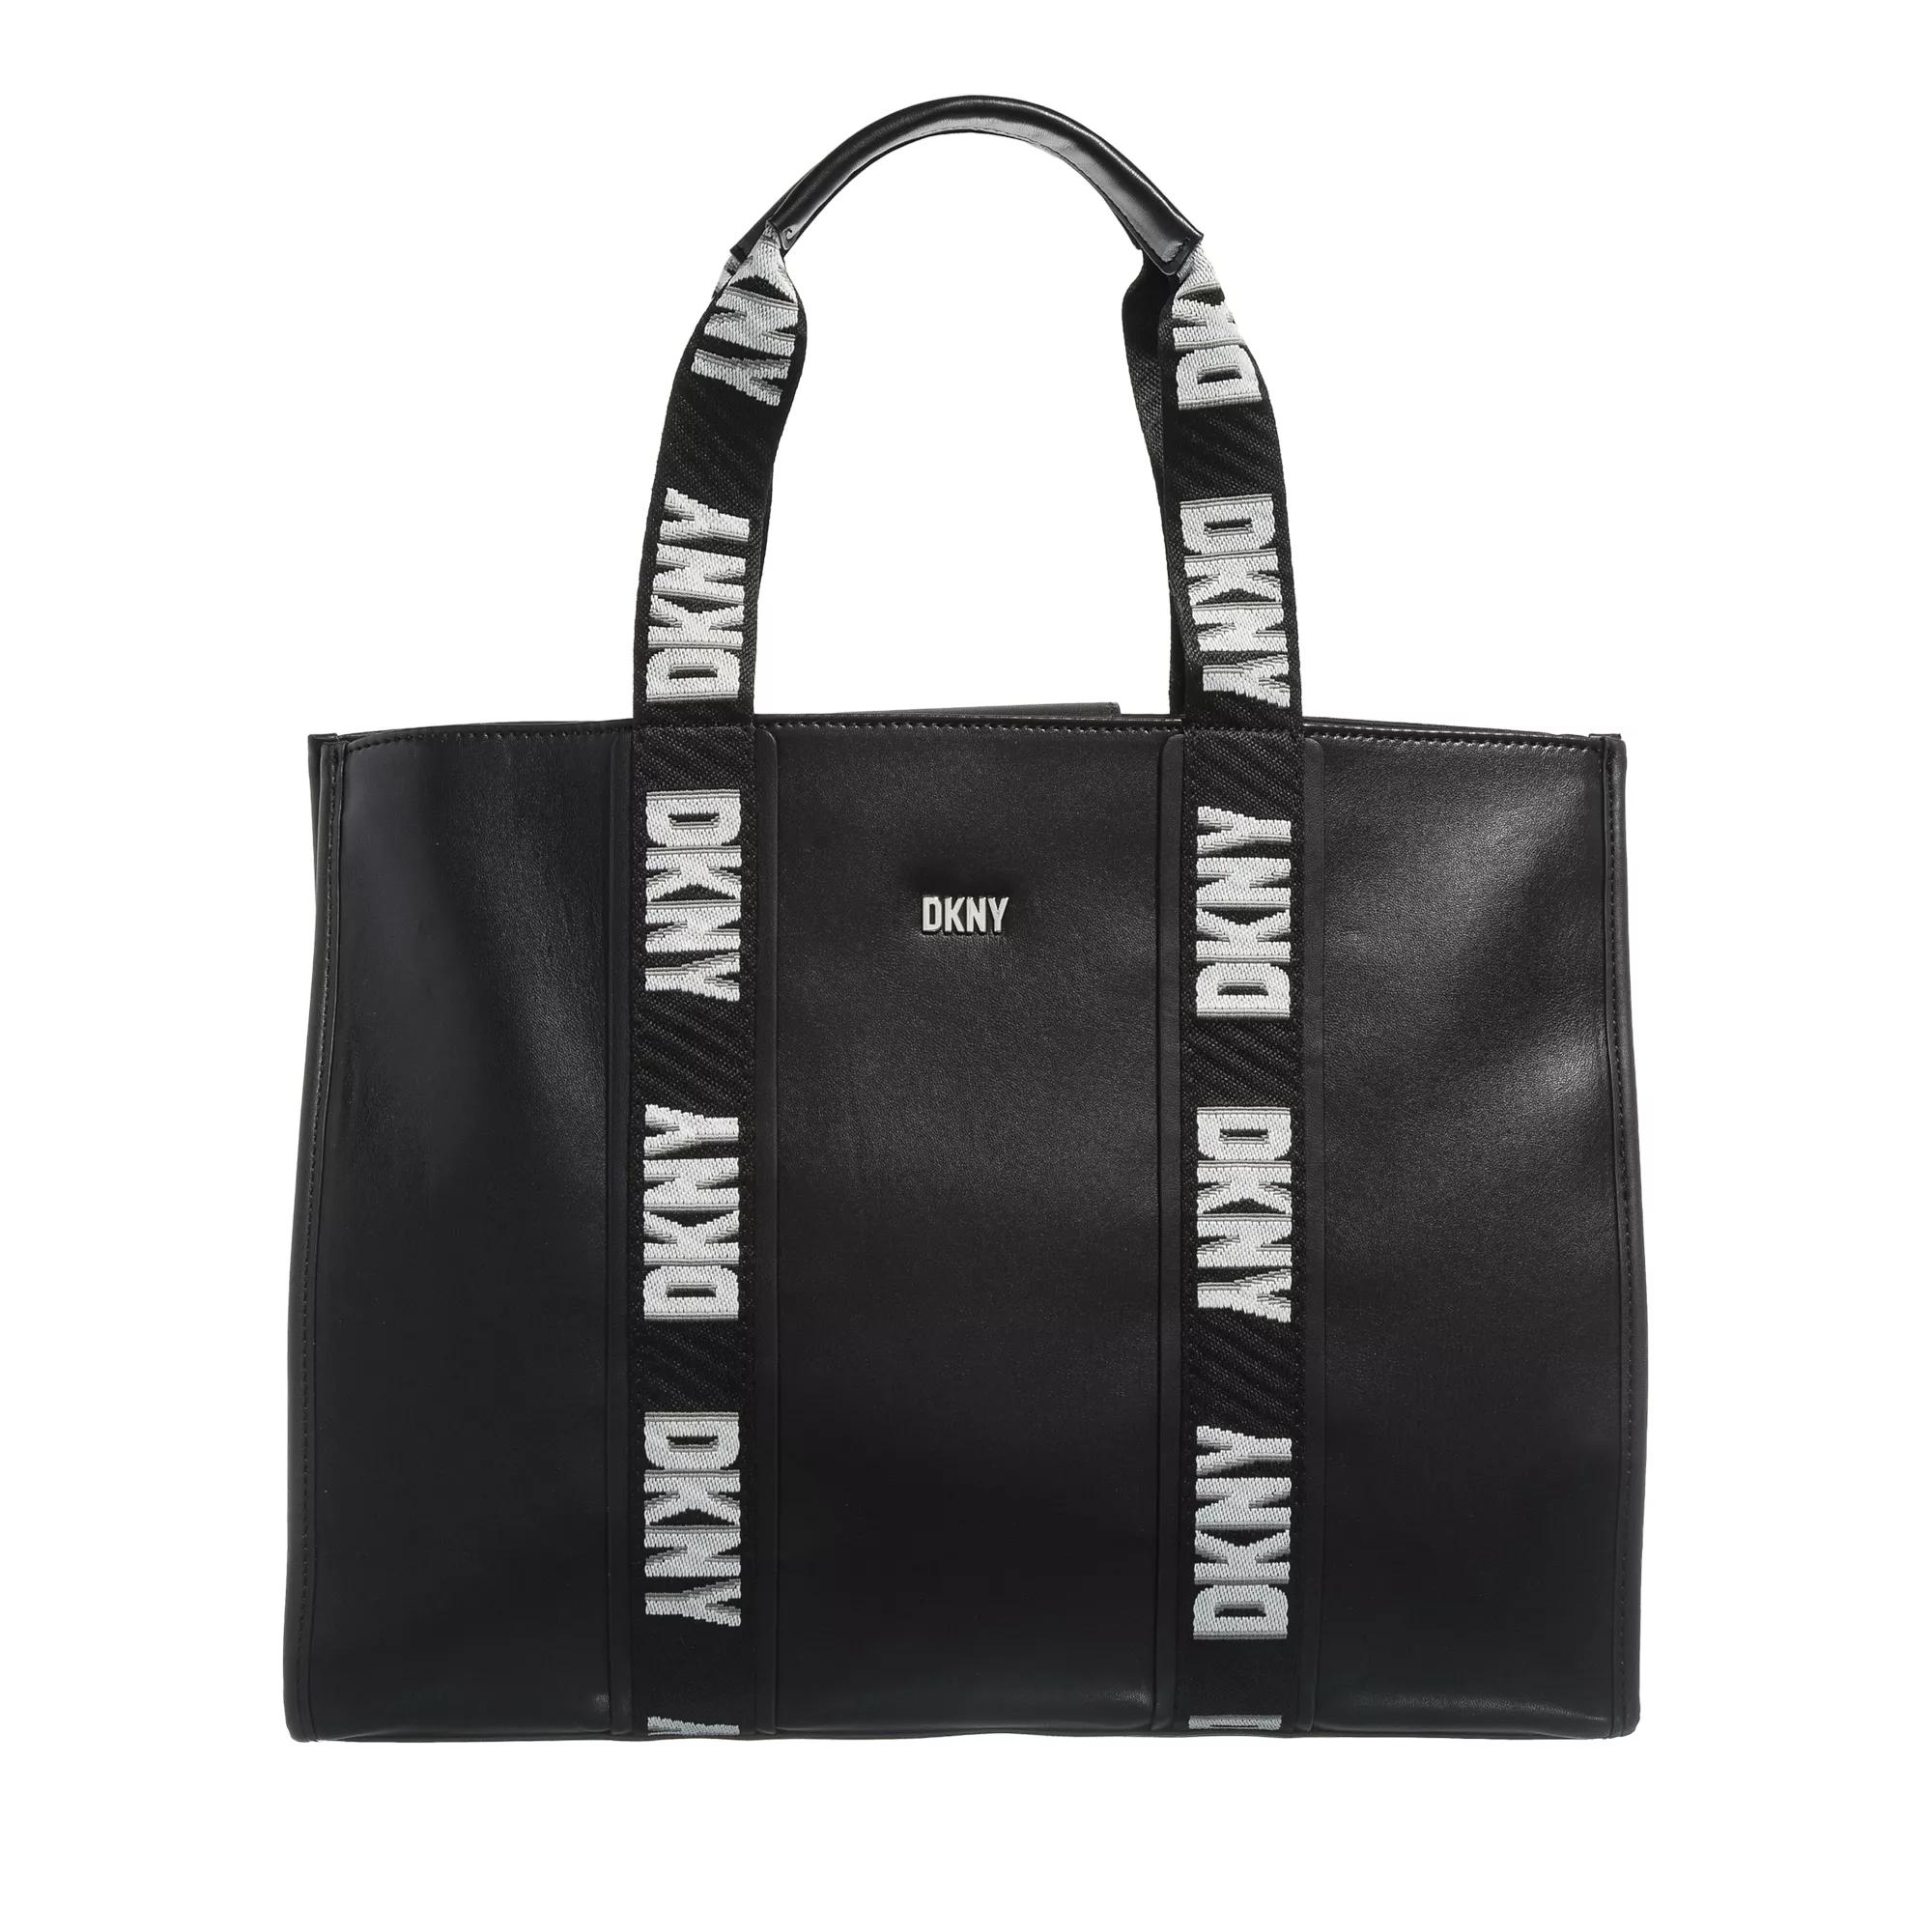 Ontrouw galop Variant DKNY tassen, schoenen, horloges & meer accessoires | fashionette